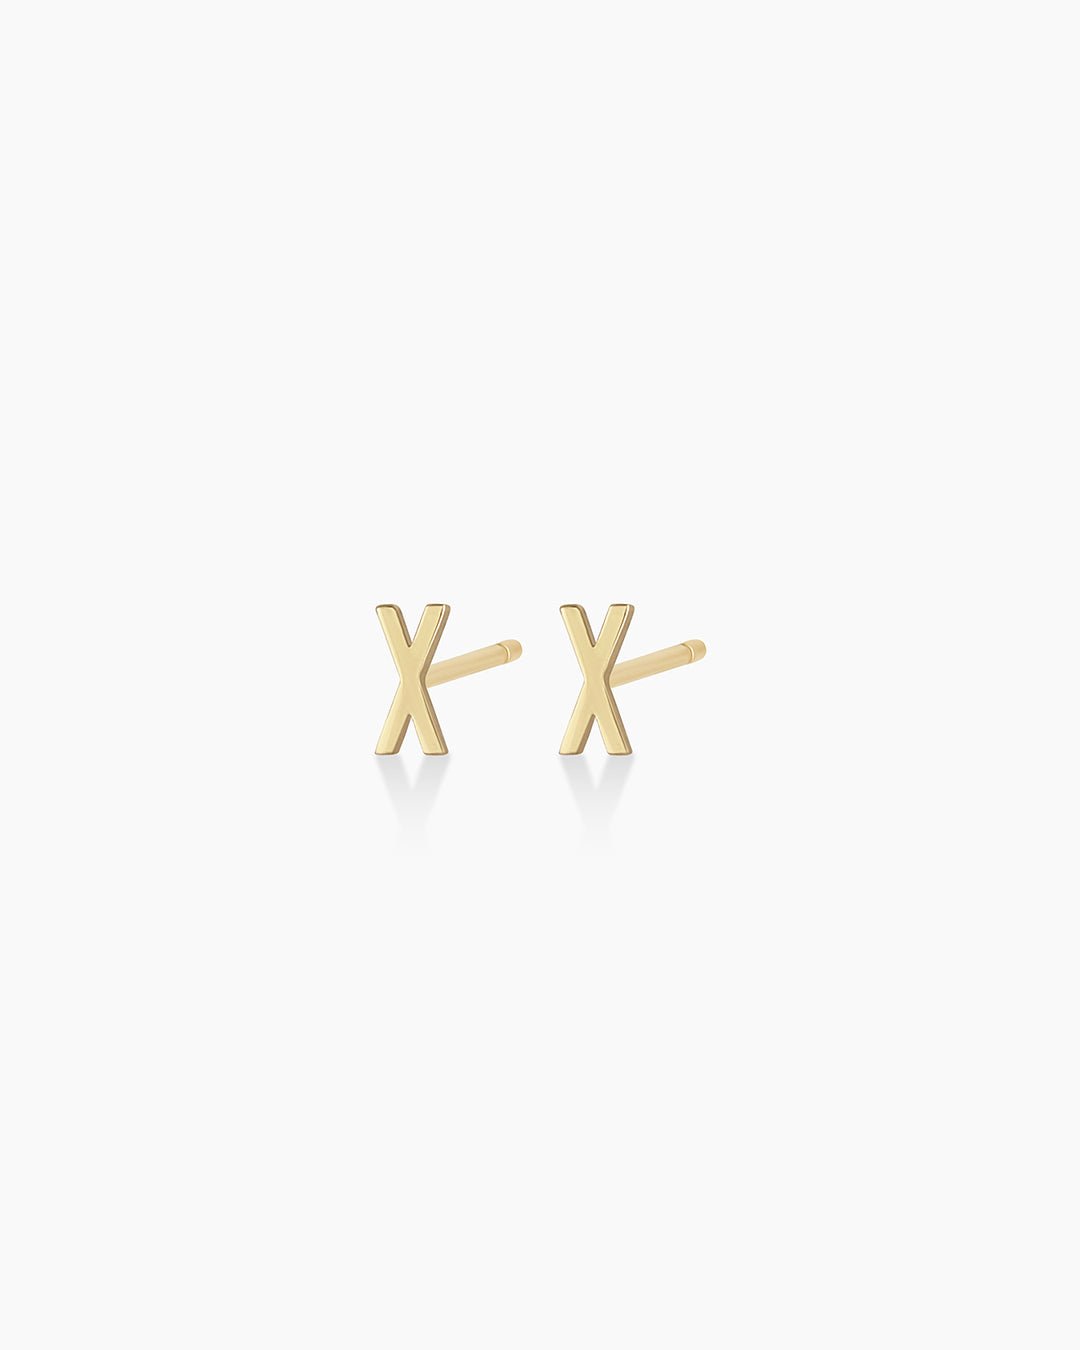 Alphabet earring stud || option::14k Solid Gold, X, Pair